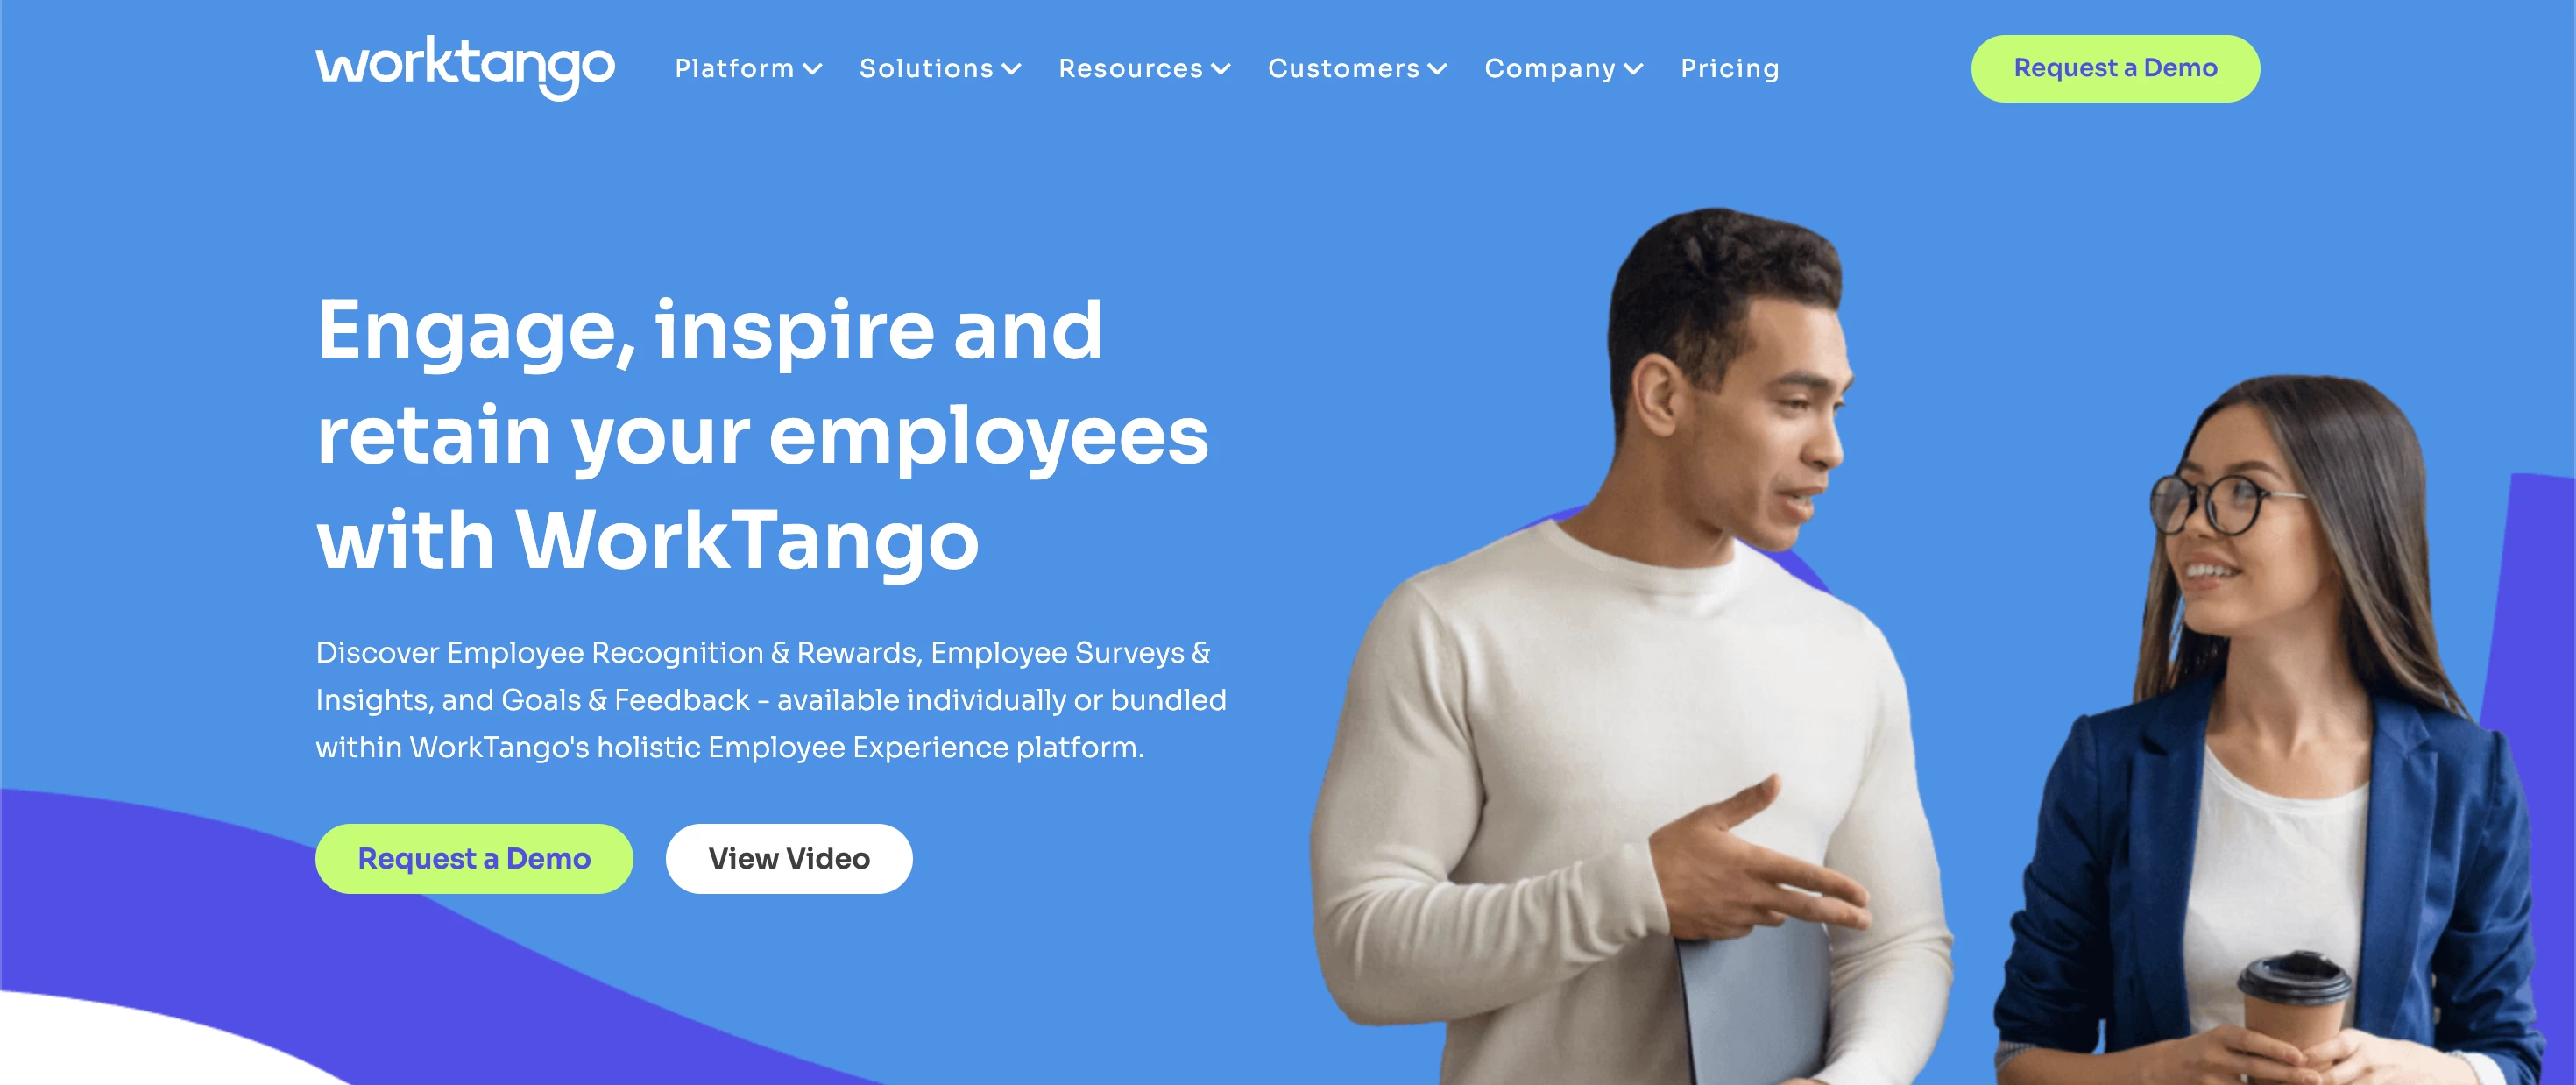 Worktango employee engagement software and platform